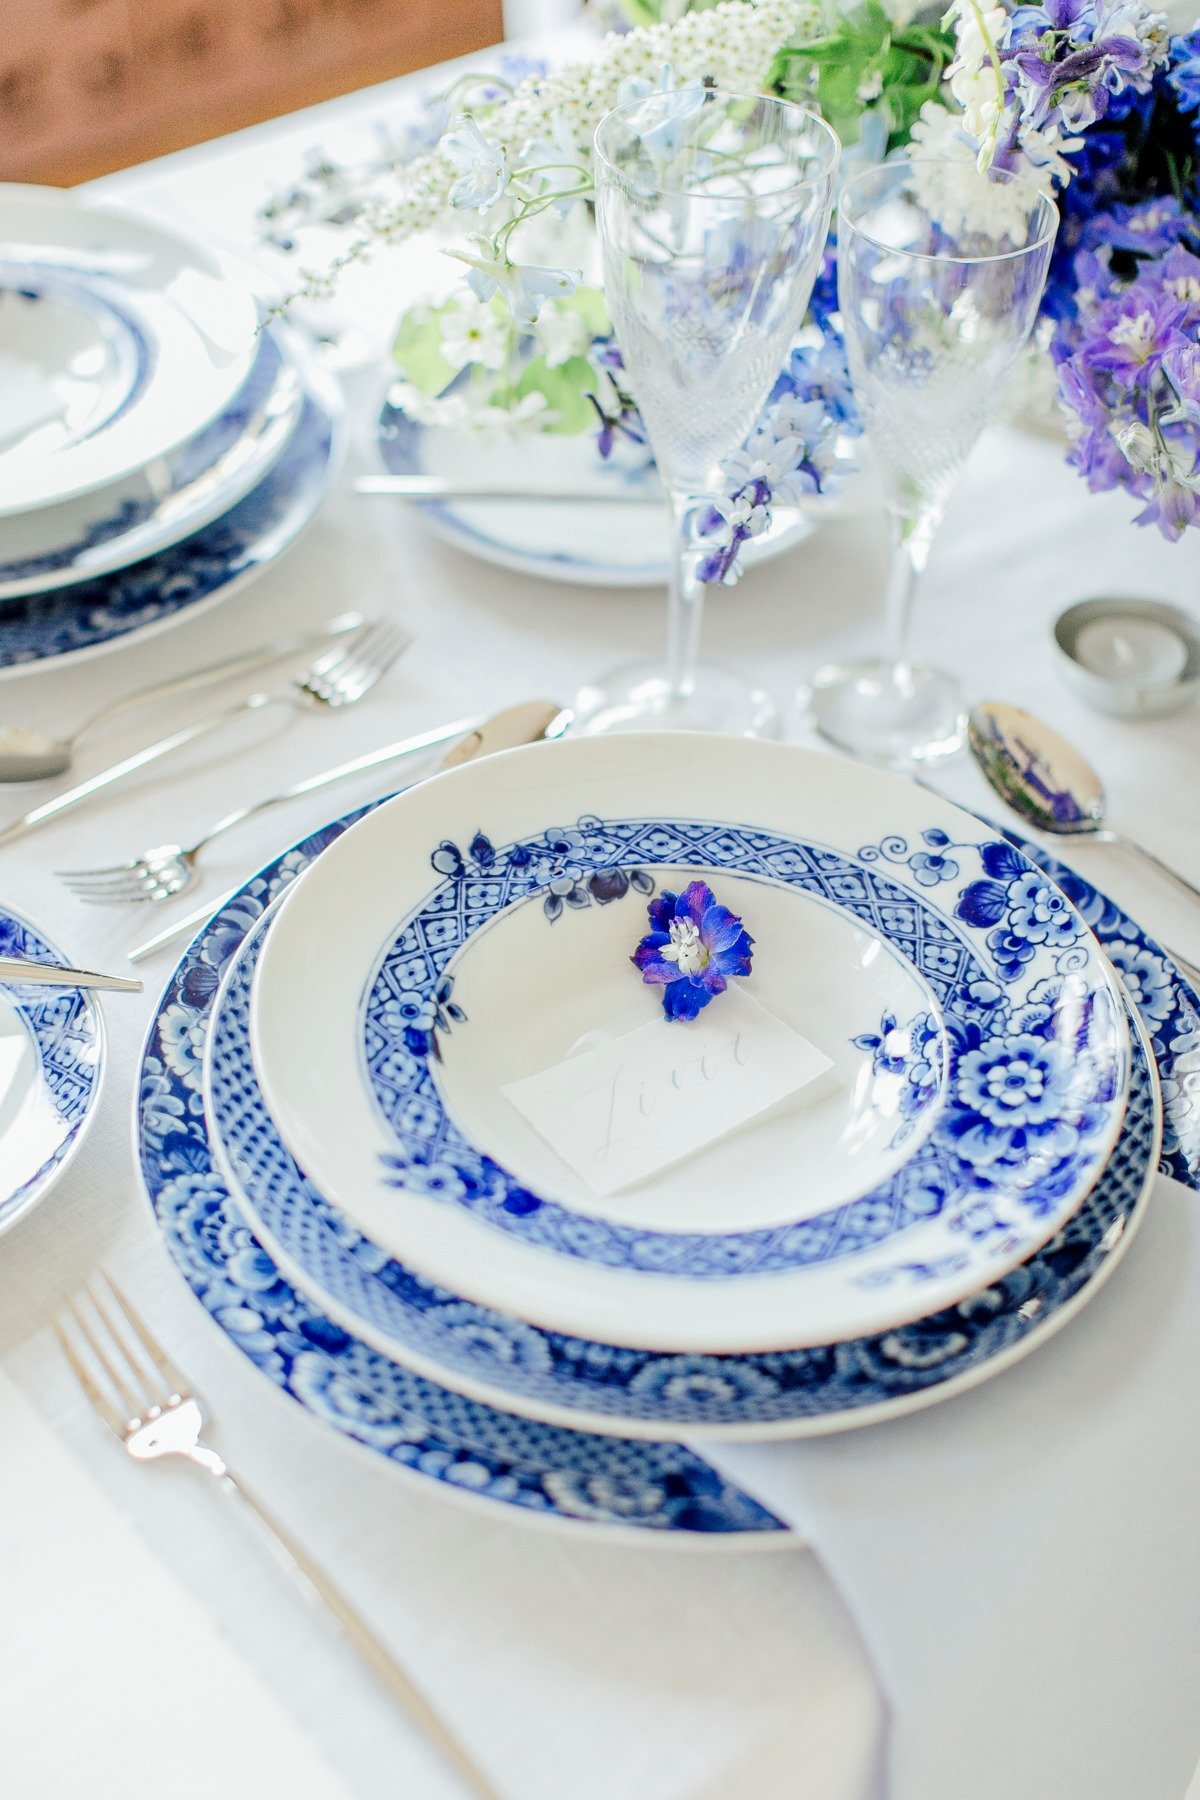 Blue and white wedding china